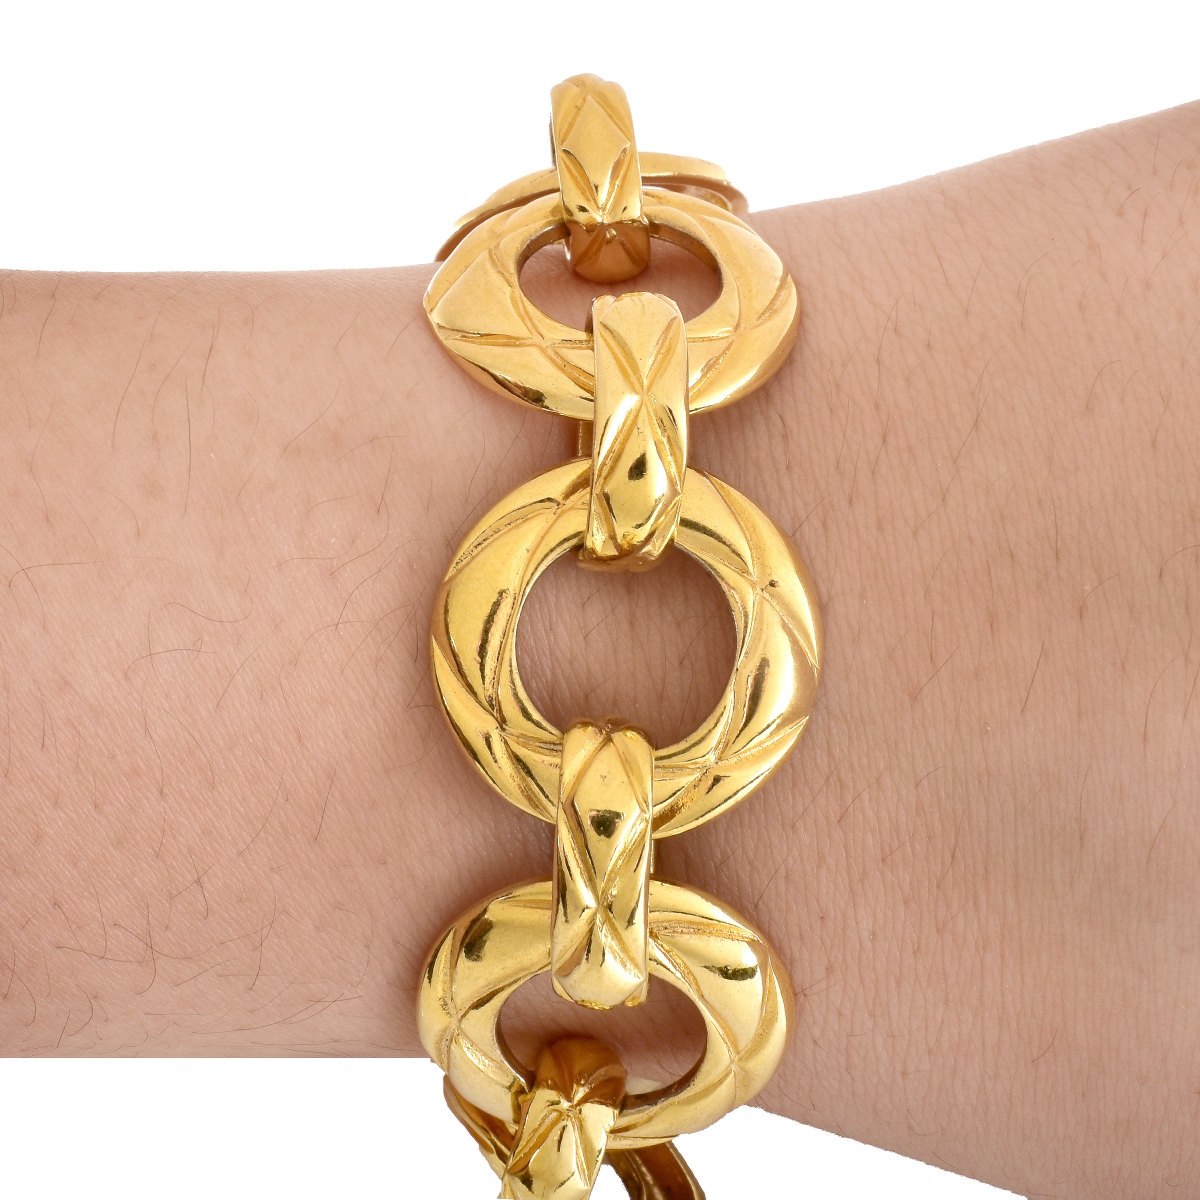 Chanel Chain Bracelet